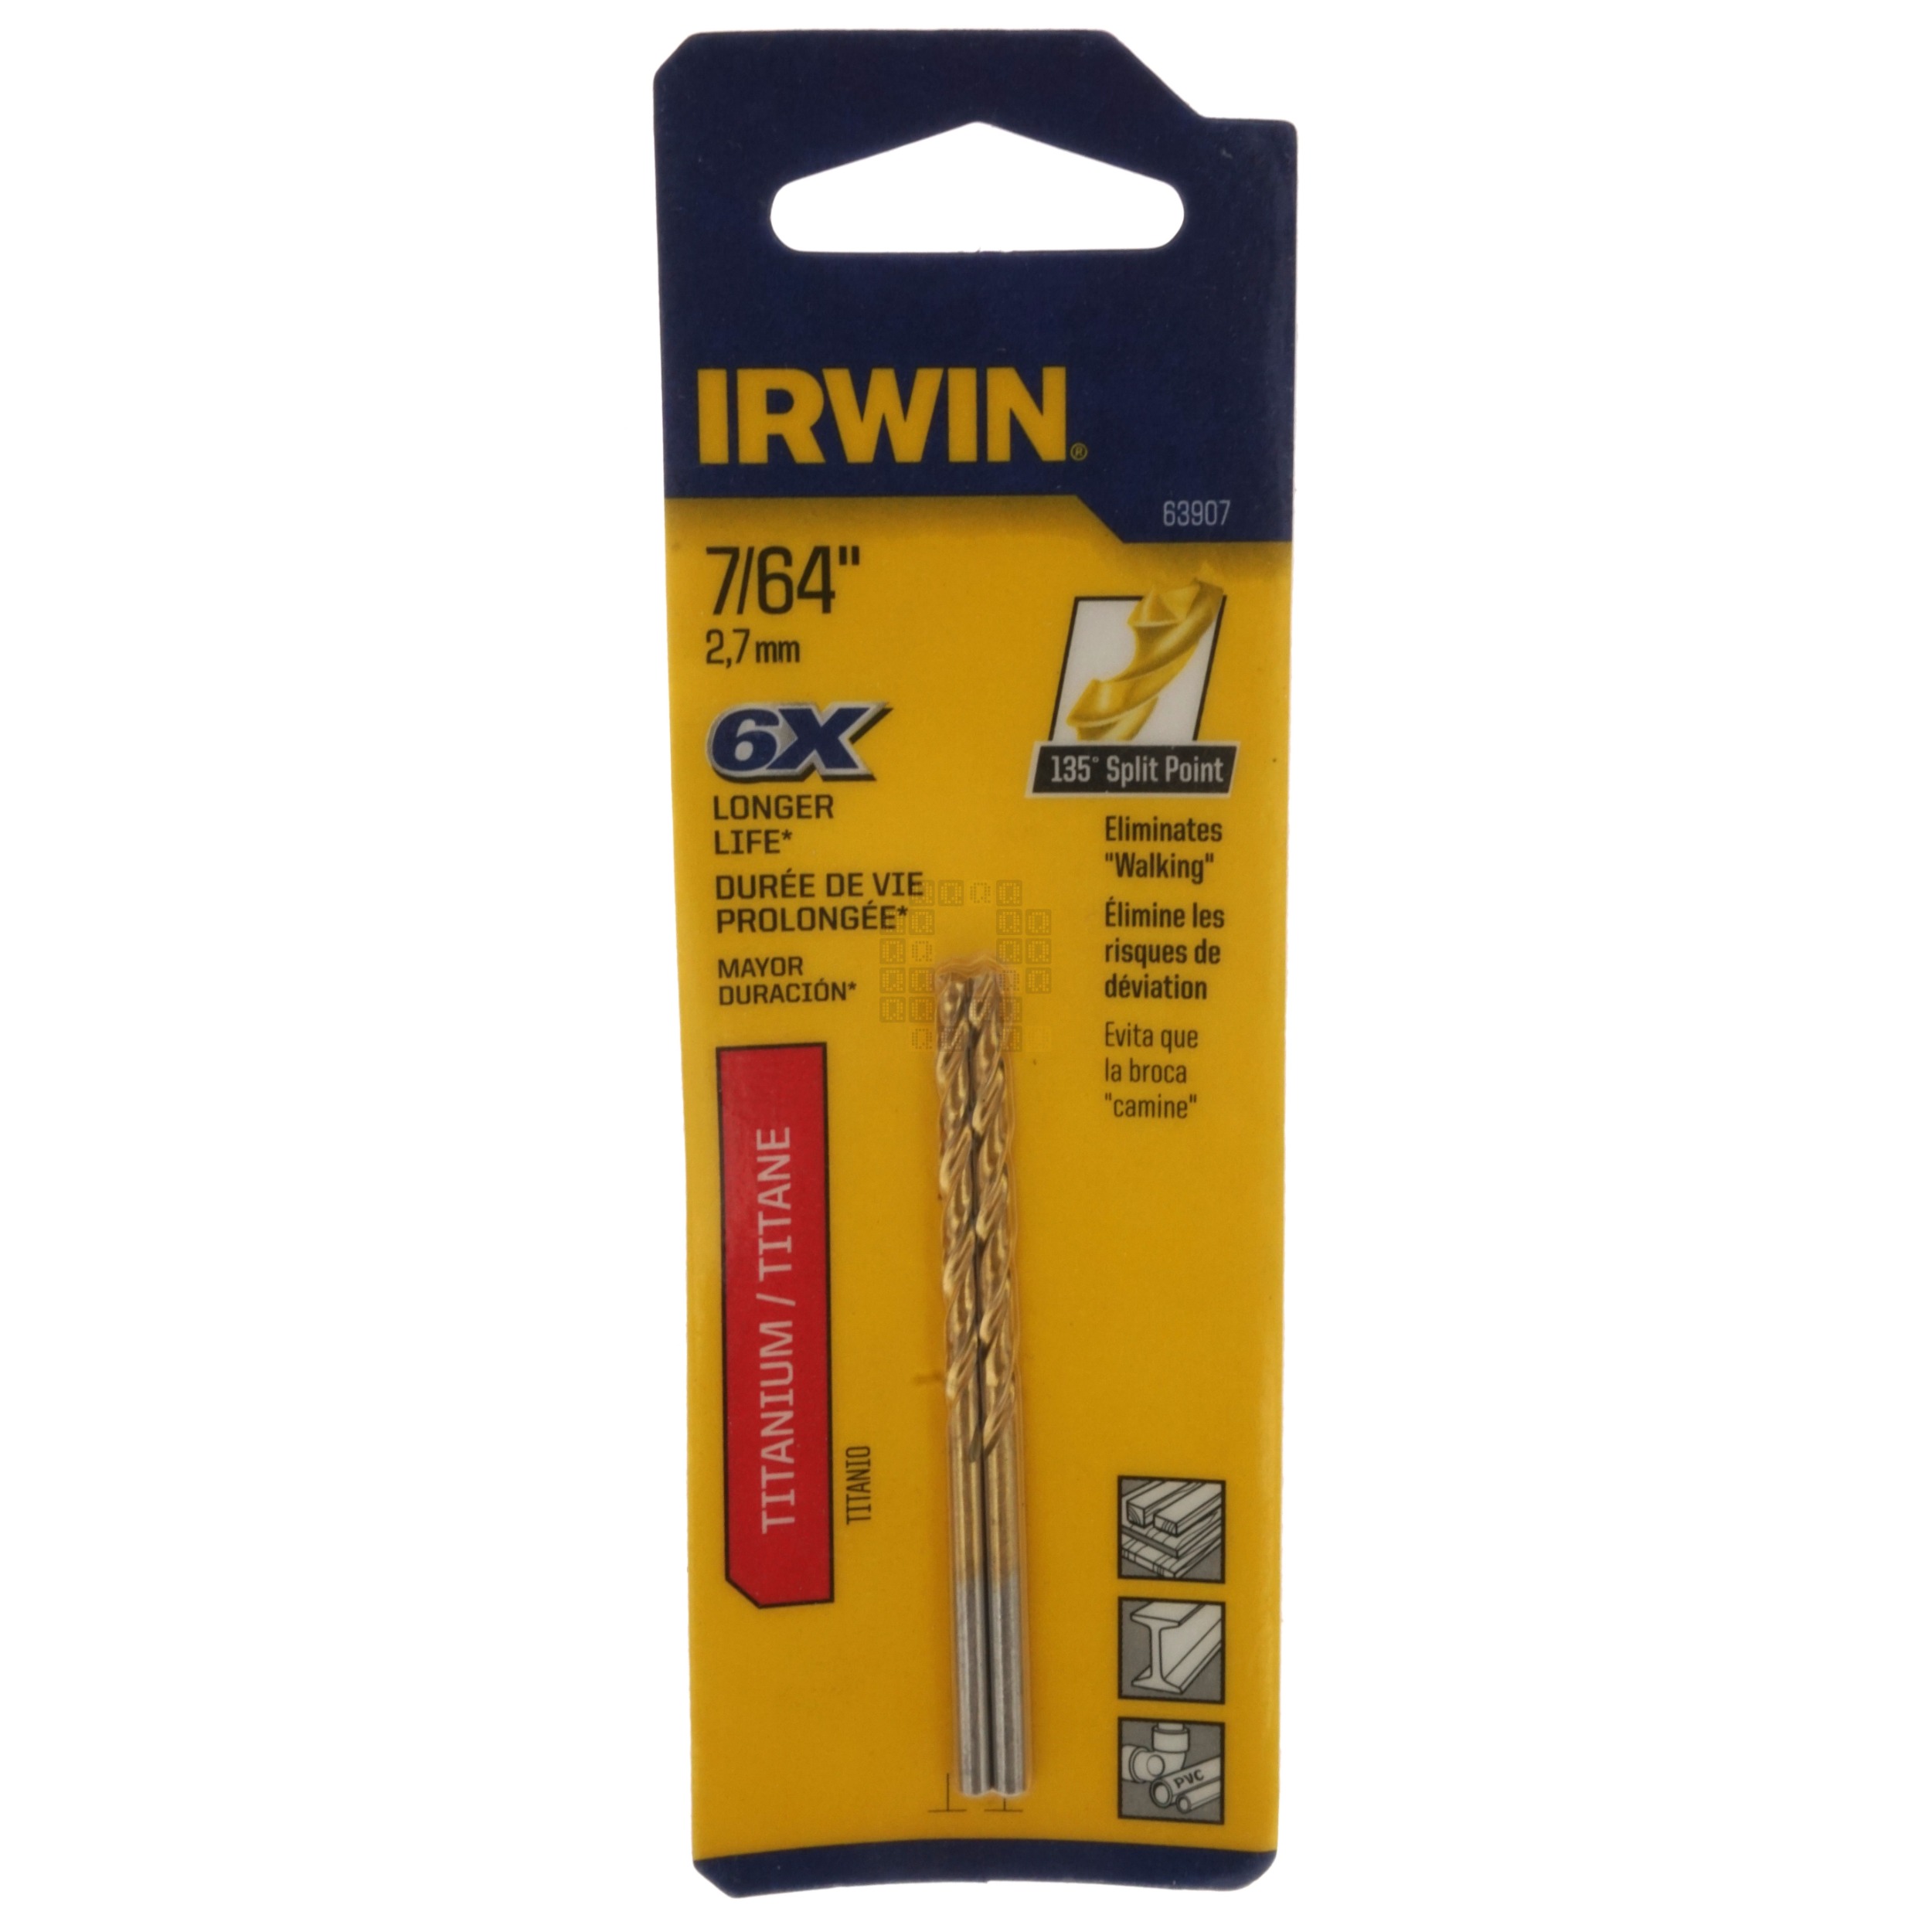 Irwin 63907 7/64" Titanium Nitride Coated 135° Split Point Drill Bits, 2-Pack